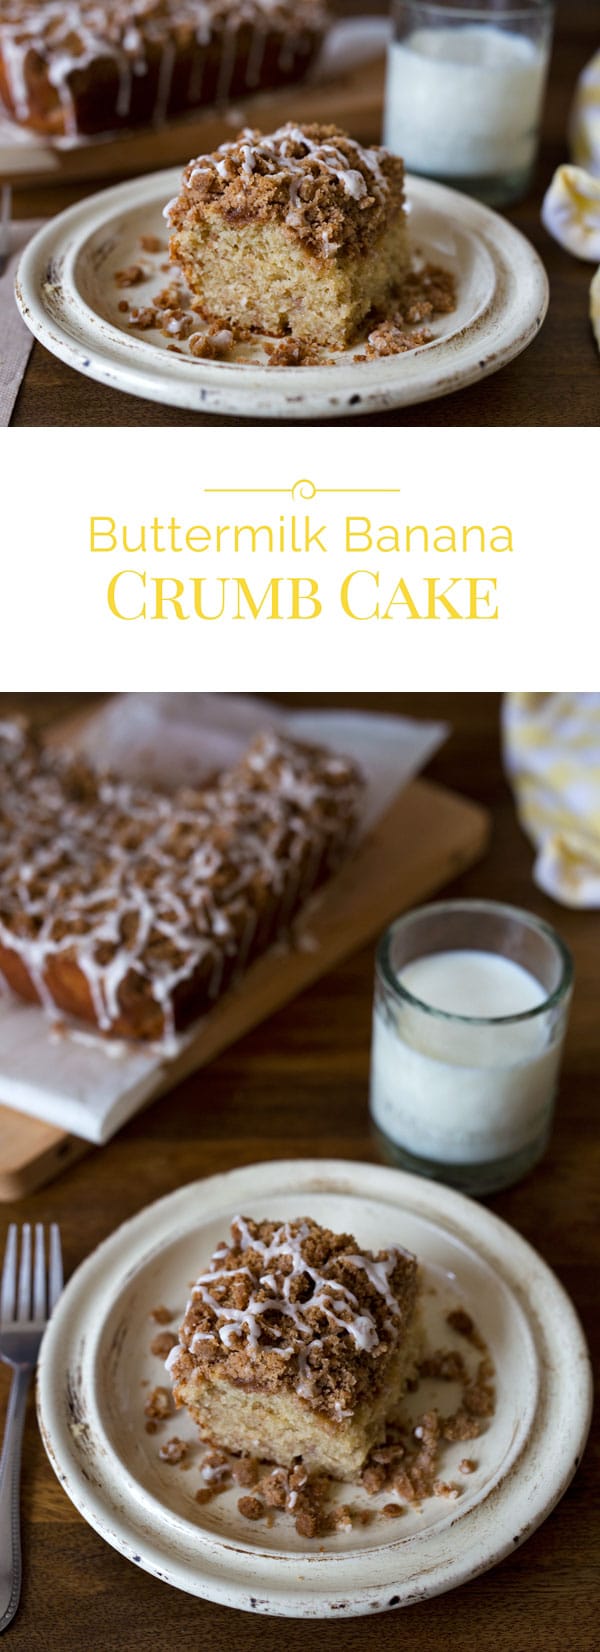 Buttermilk Banana Crumb Cake - Barbara Bakes